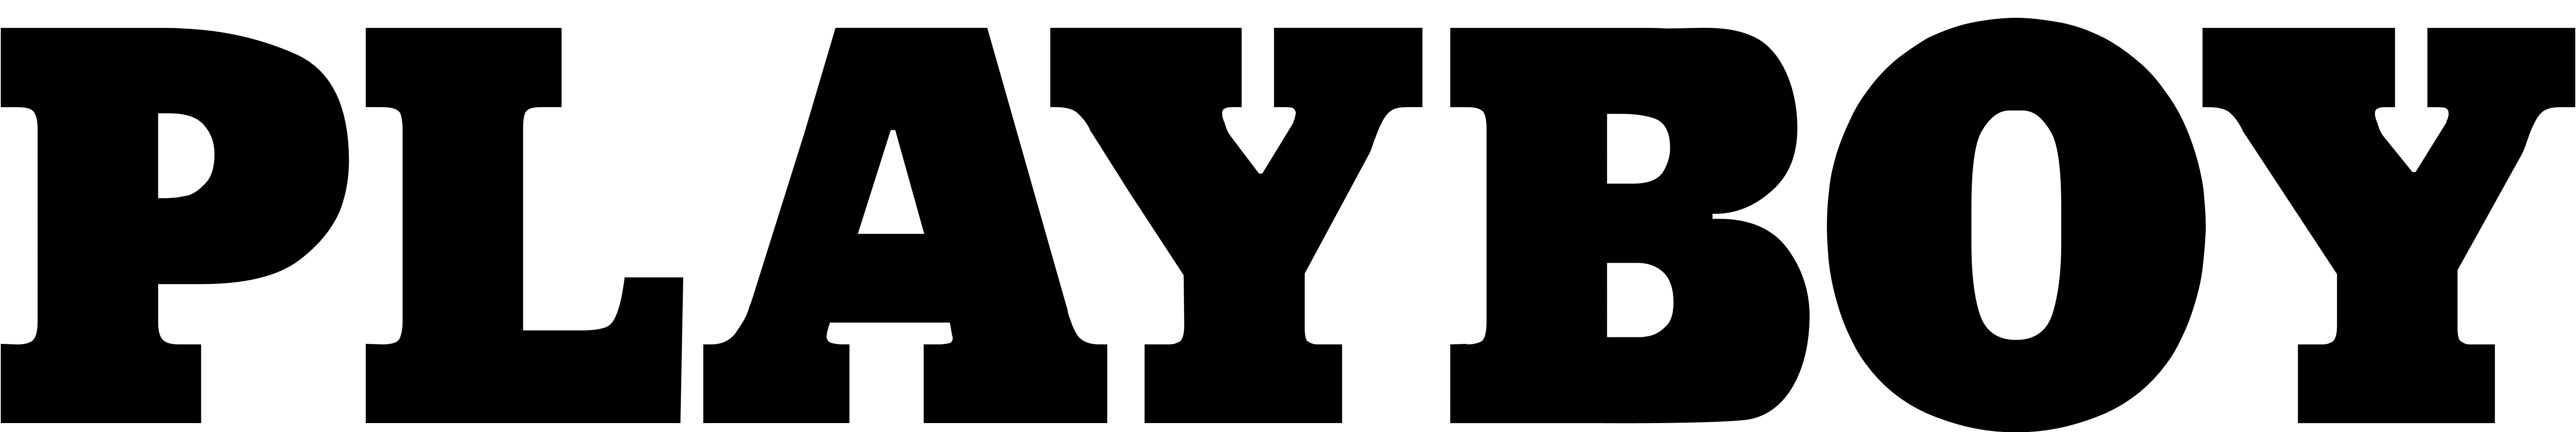 Playboy Logo PNG Isolated Image